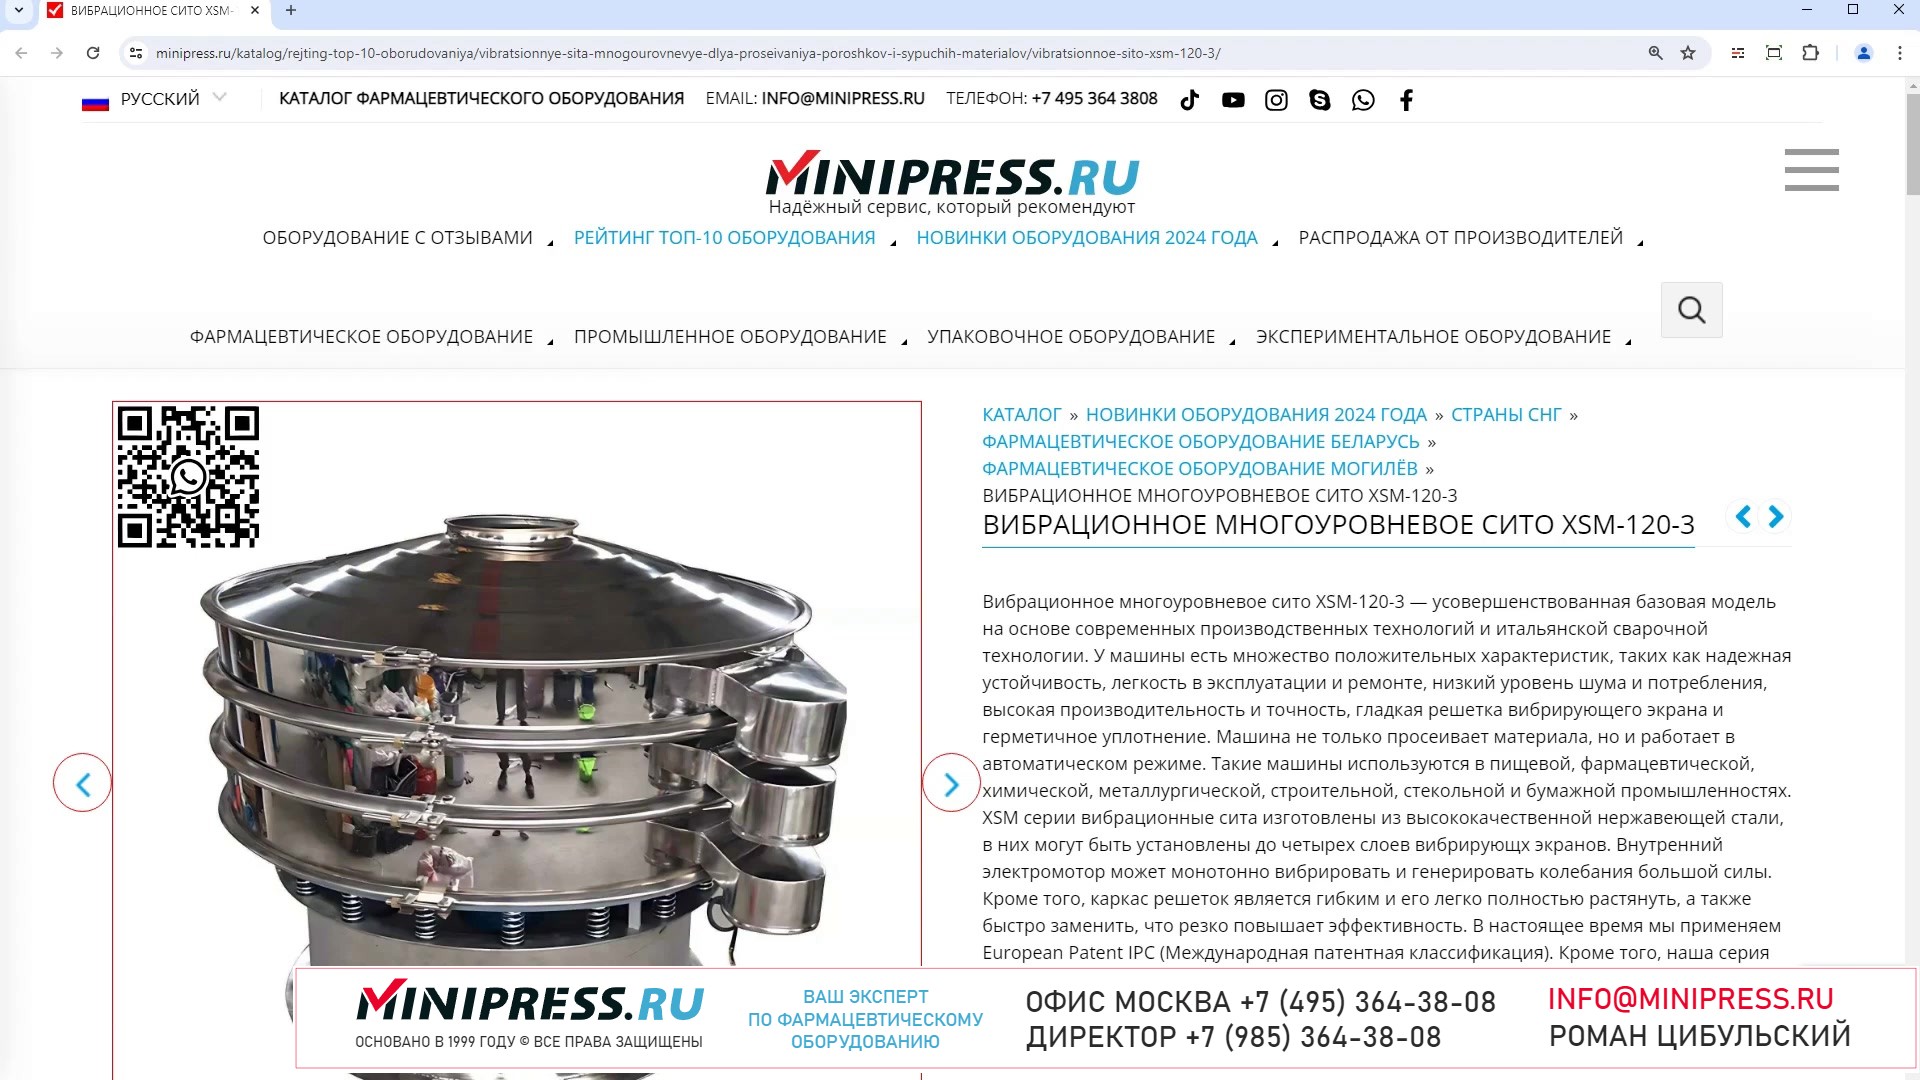 Minipress.ru Вибрационное многоуровневое сито XSM-120-3